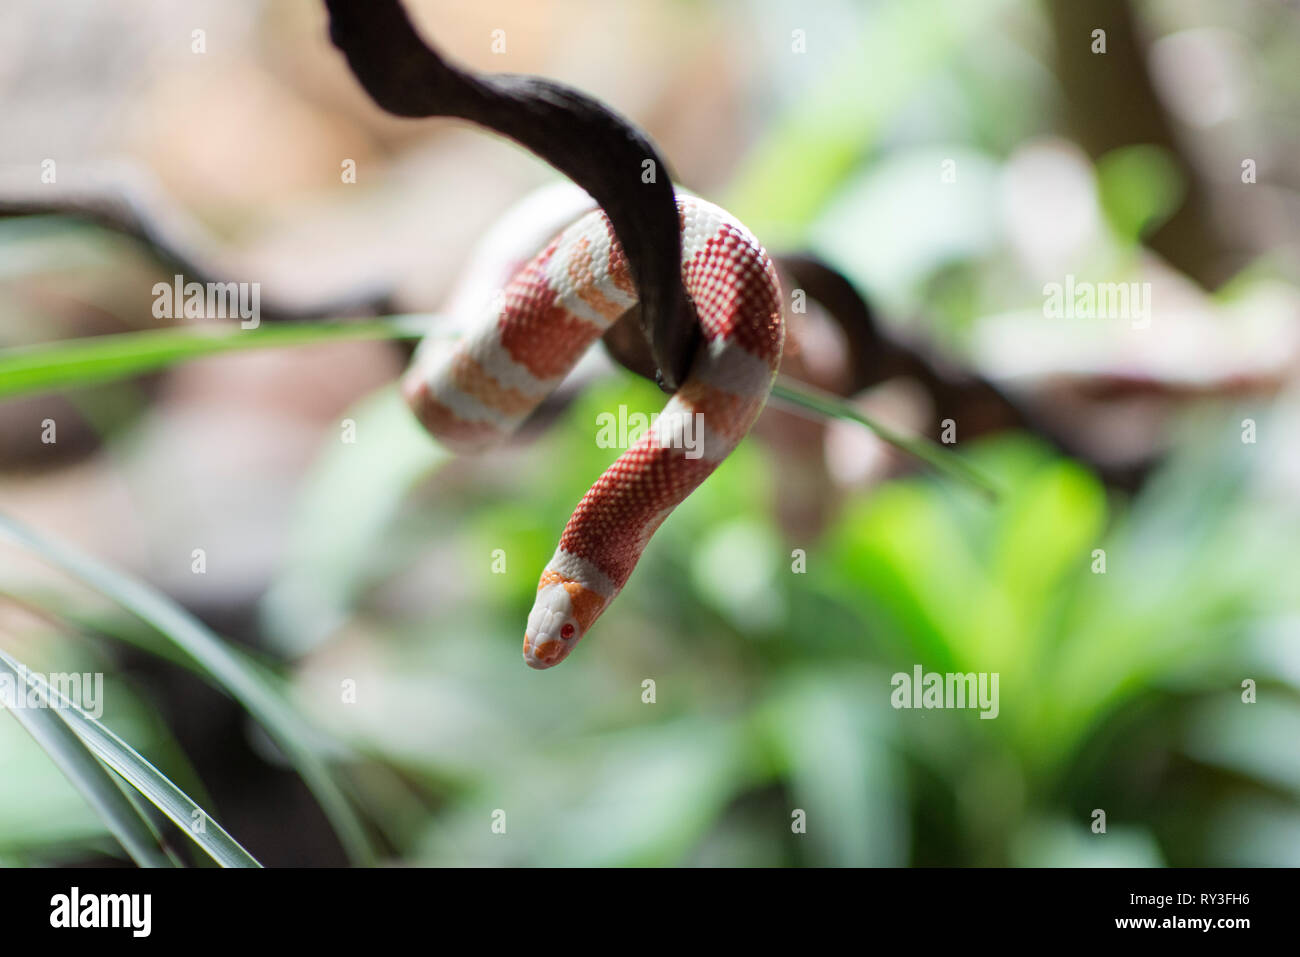 An albino Milk Snake, Albino Tangerine Honduran Milk Snake, also called Lampropeltis triangulum hondurensis, on a branch in Vietnam Stock Photo